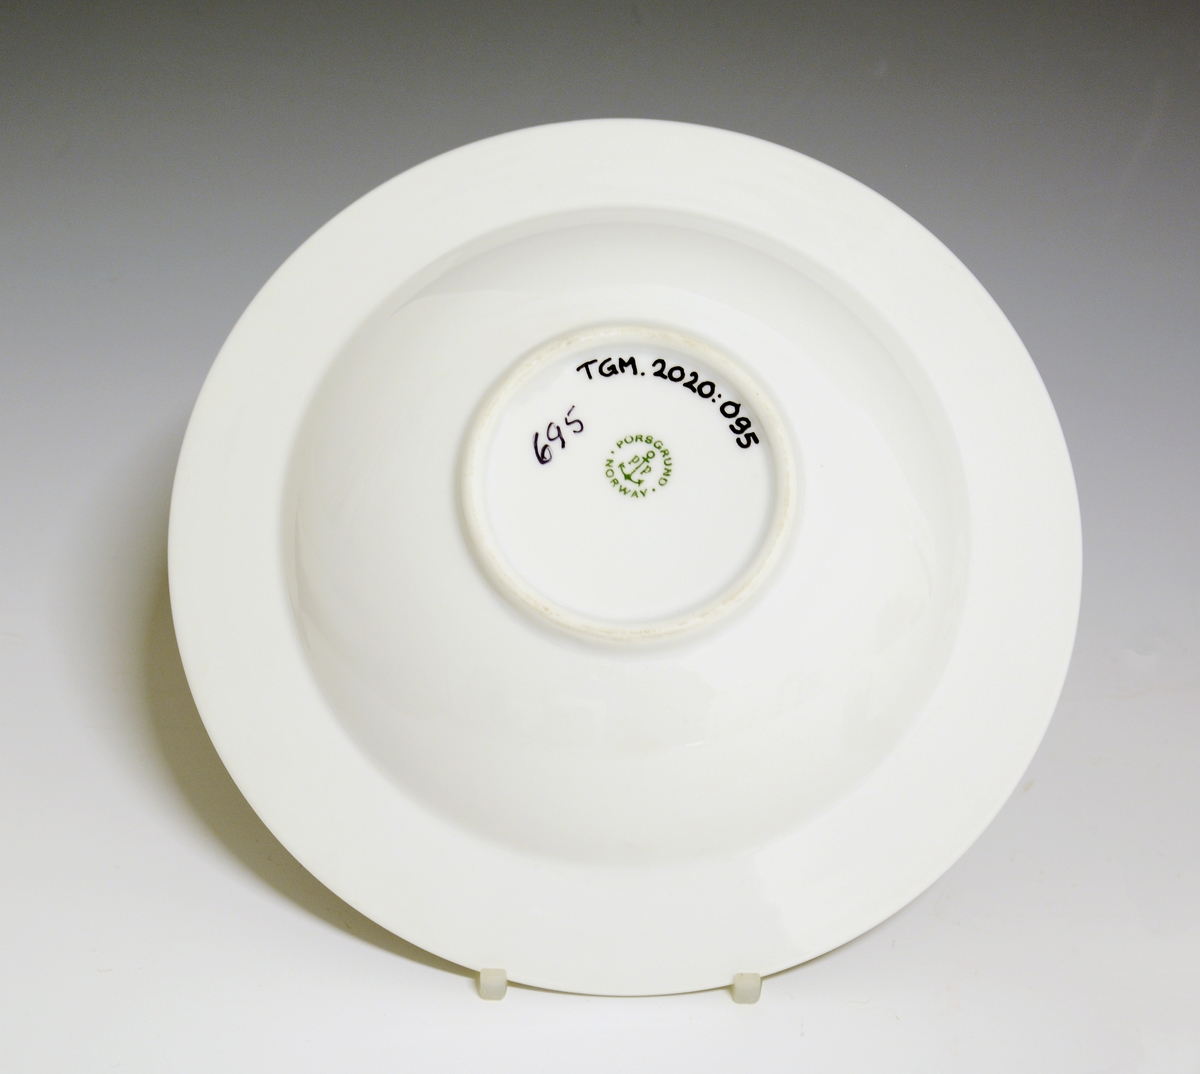 Dyp tallerken av porselen med hvit glasur. I fanens gods riller. Dekorert med trykket svibel.
Modell: Saturn
Dekor: Svibel trykkdekor.